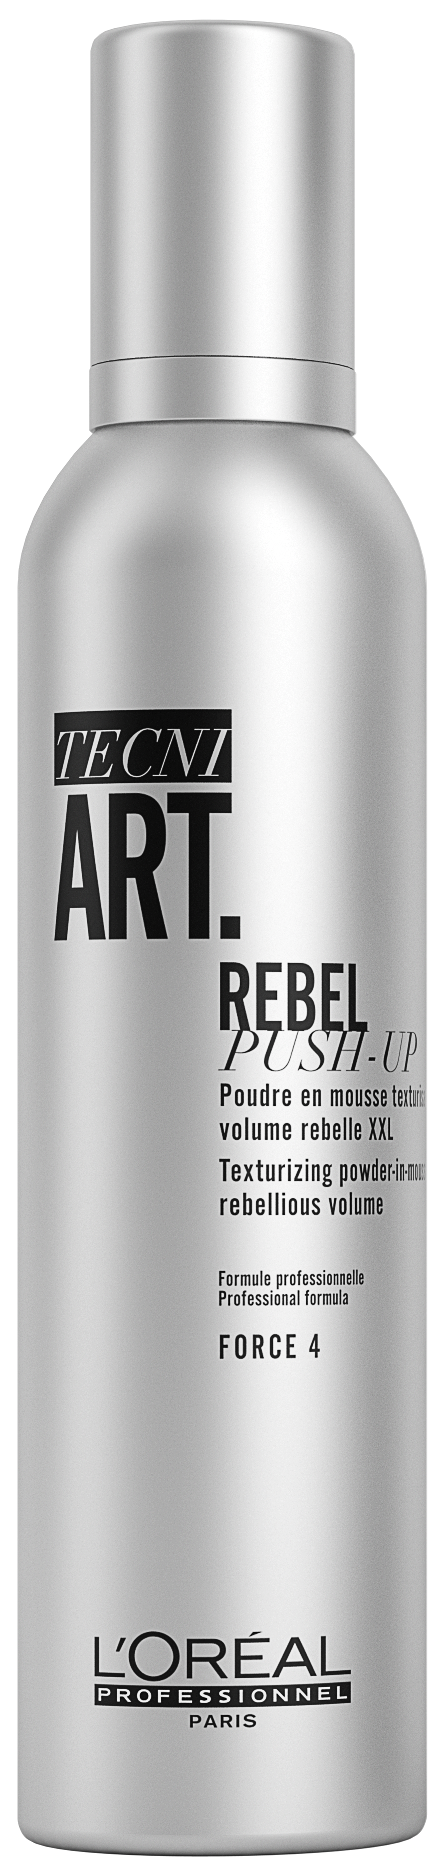 Tecni art Rebel Push up 250ml